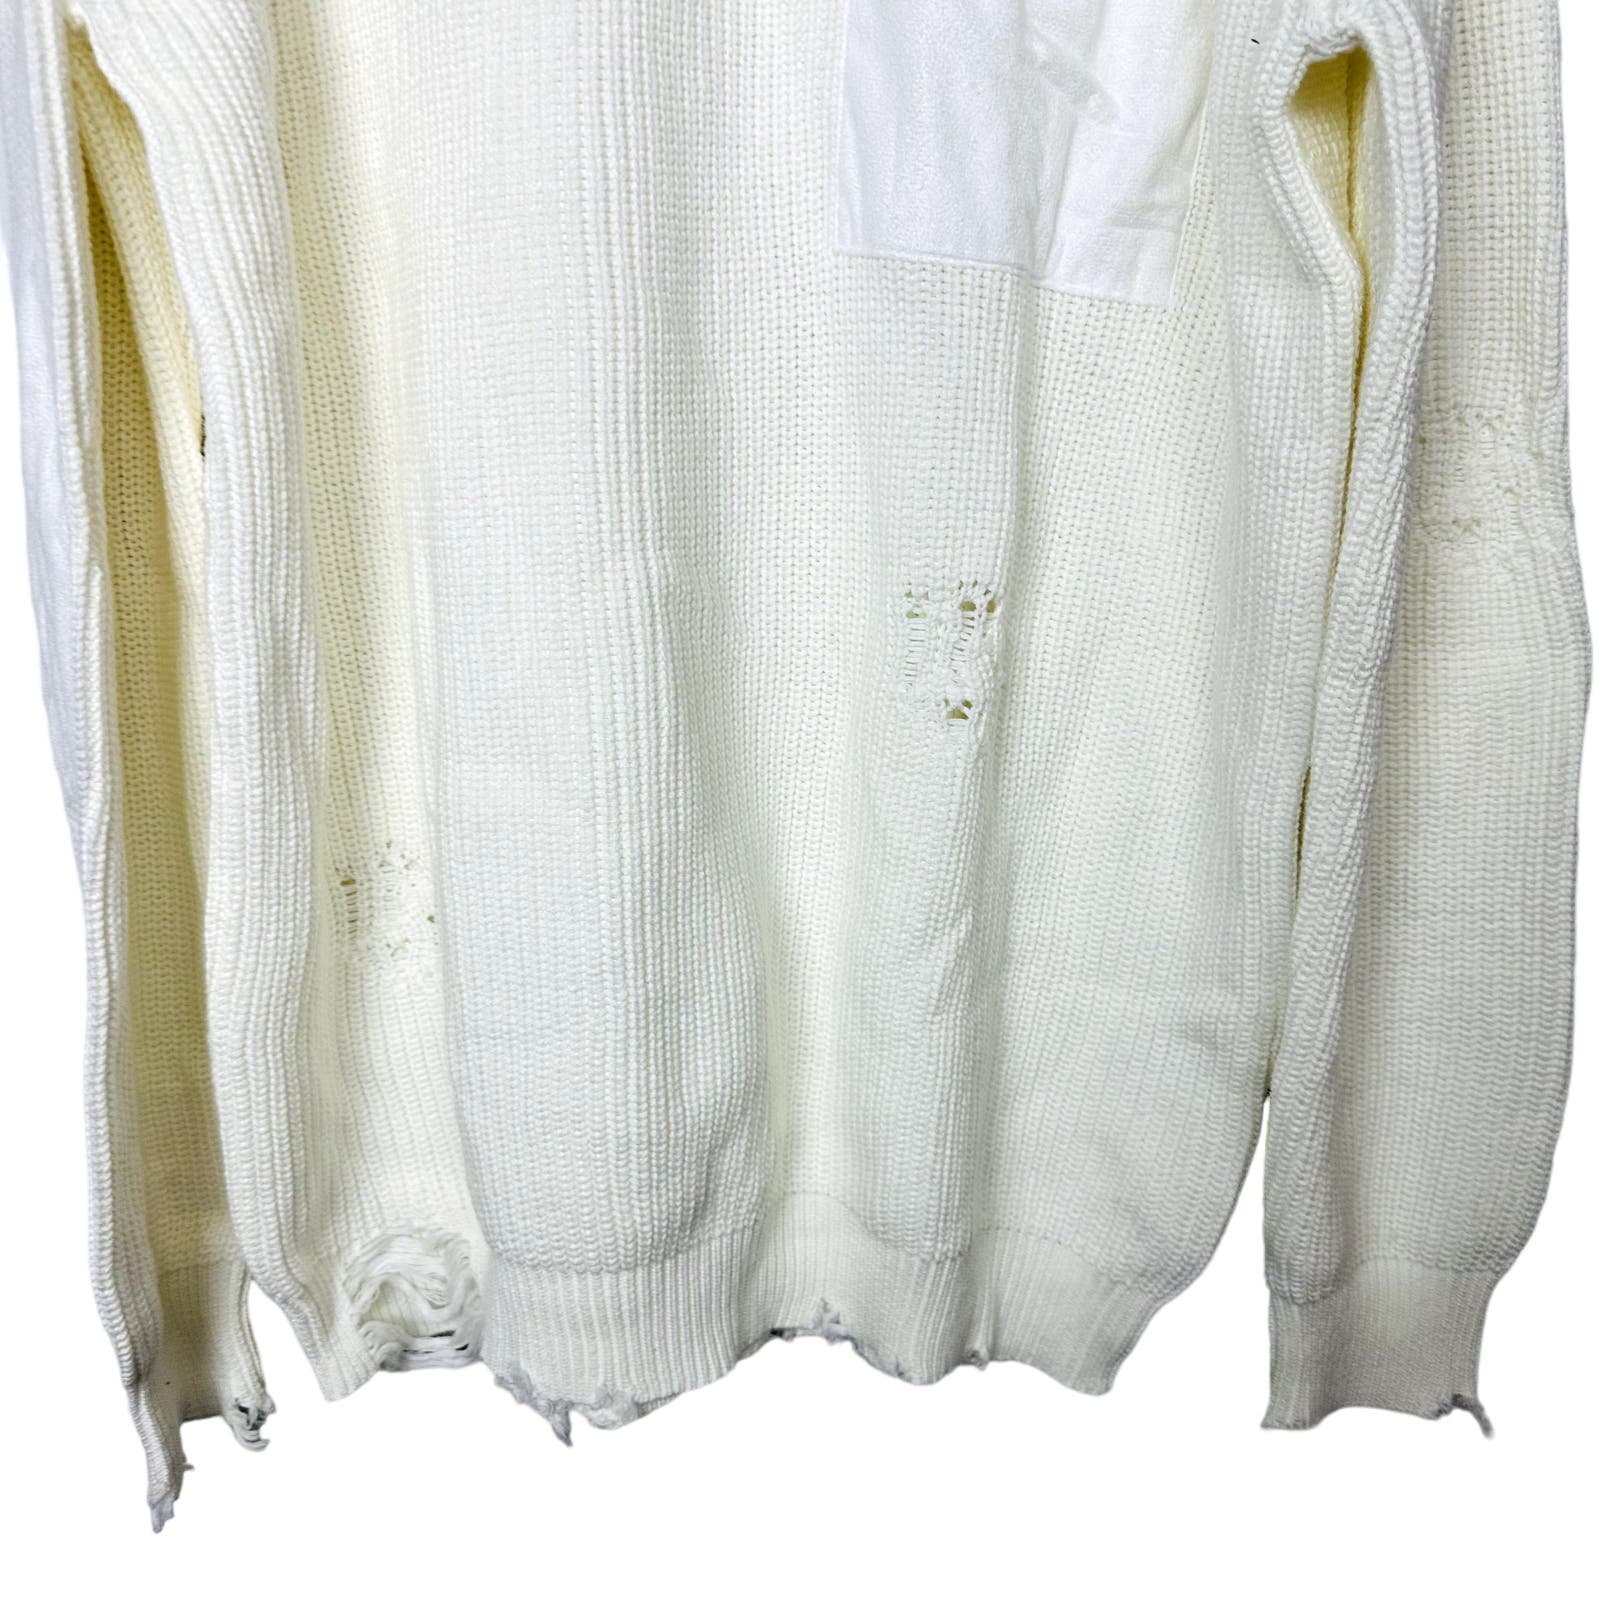 Ser.O.Ya NWT Revolve White Distressed Devin Crew Neck Sweater Dress Size 2XL